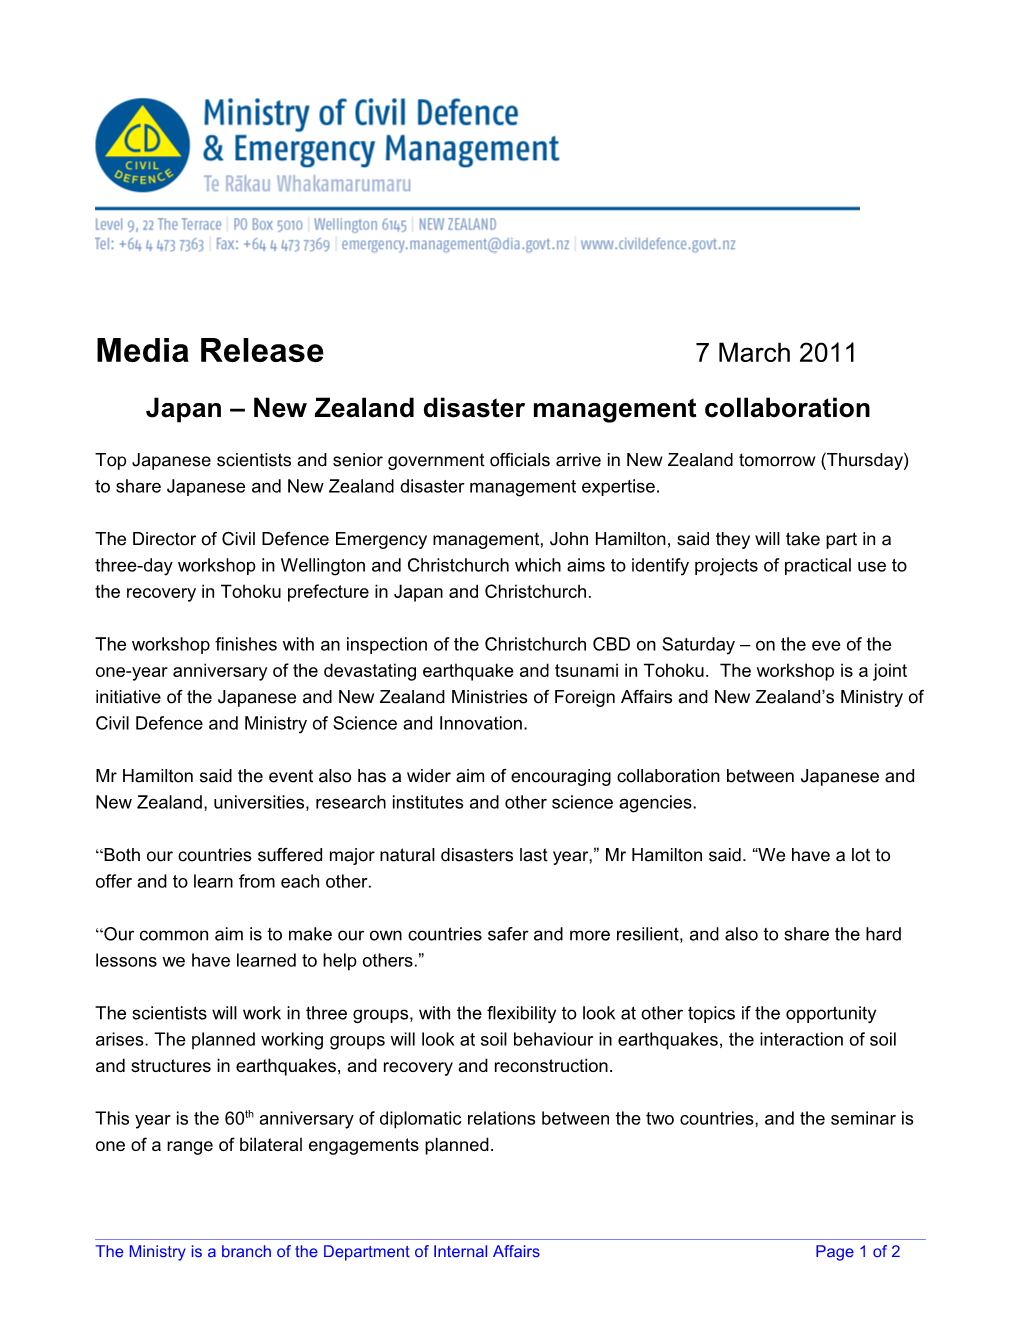 Japan New Zealand Disaster Management Collaboration